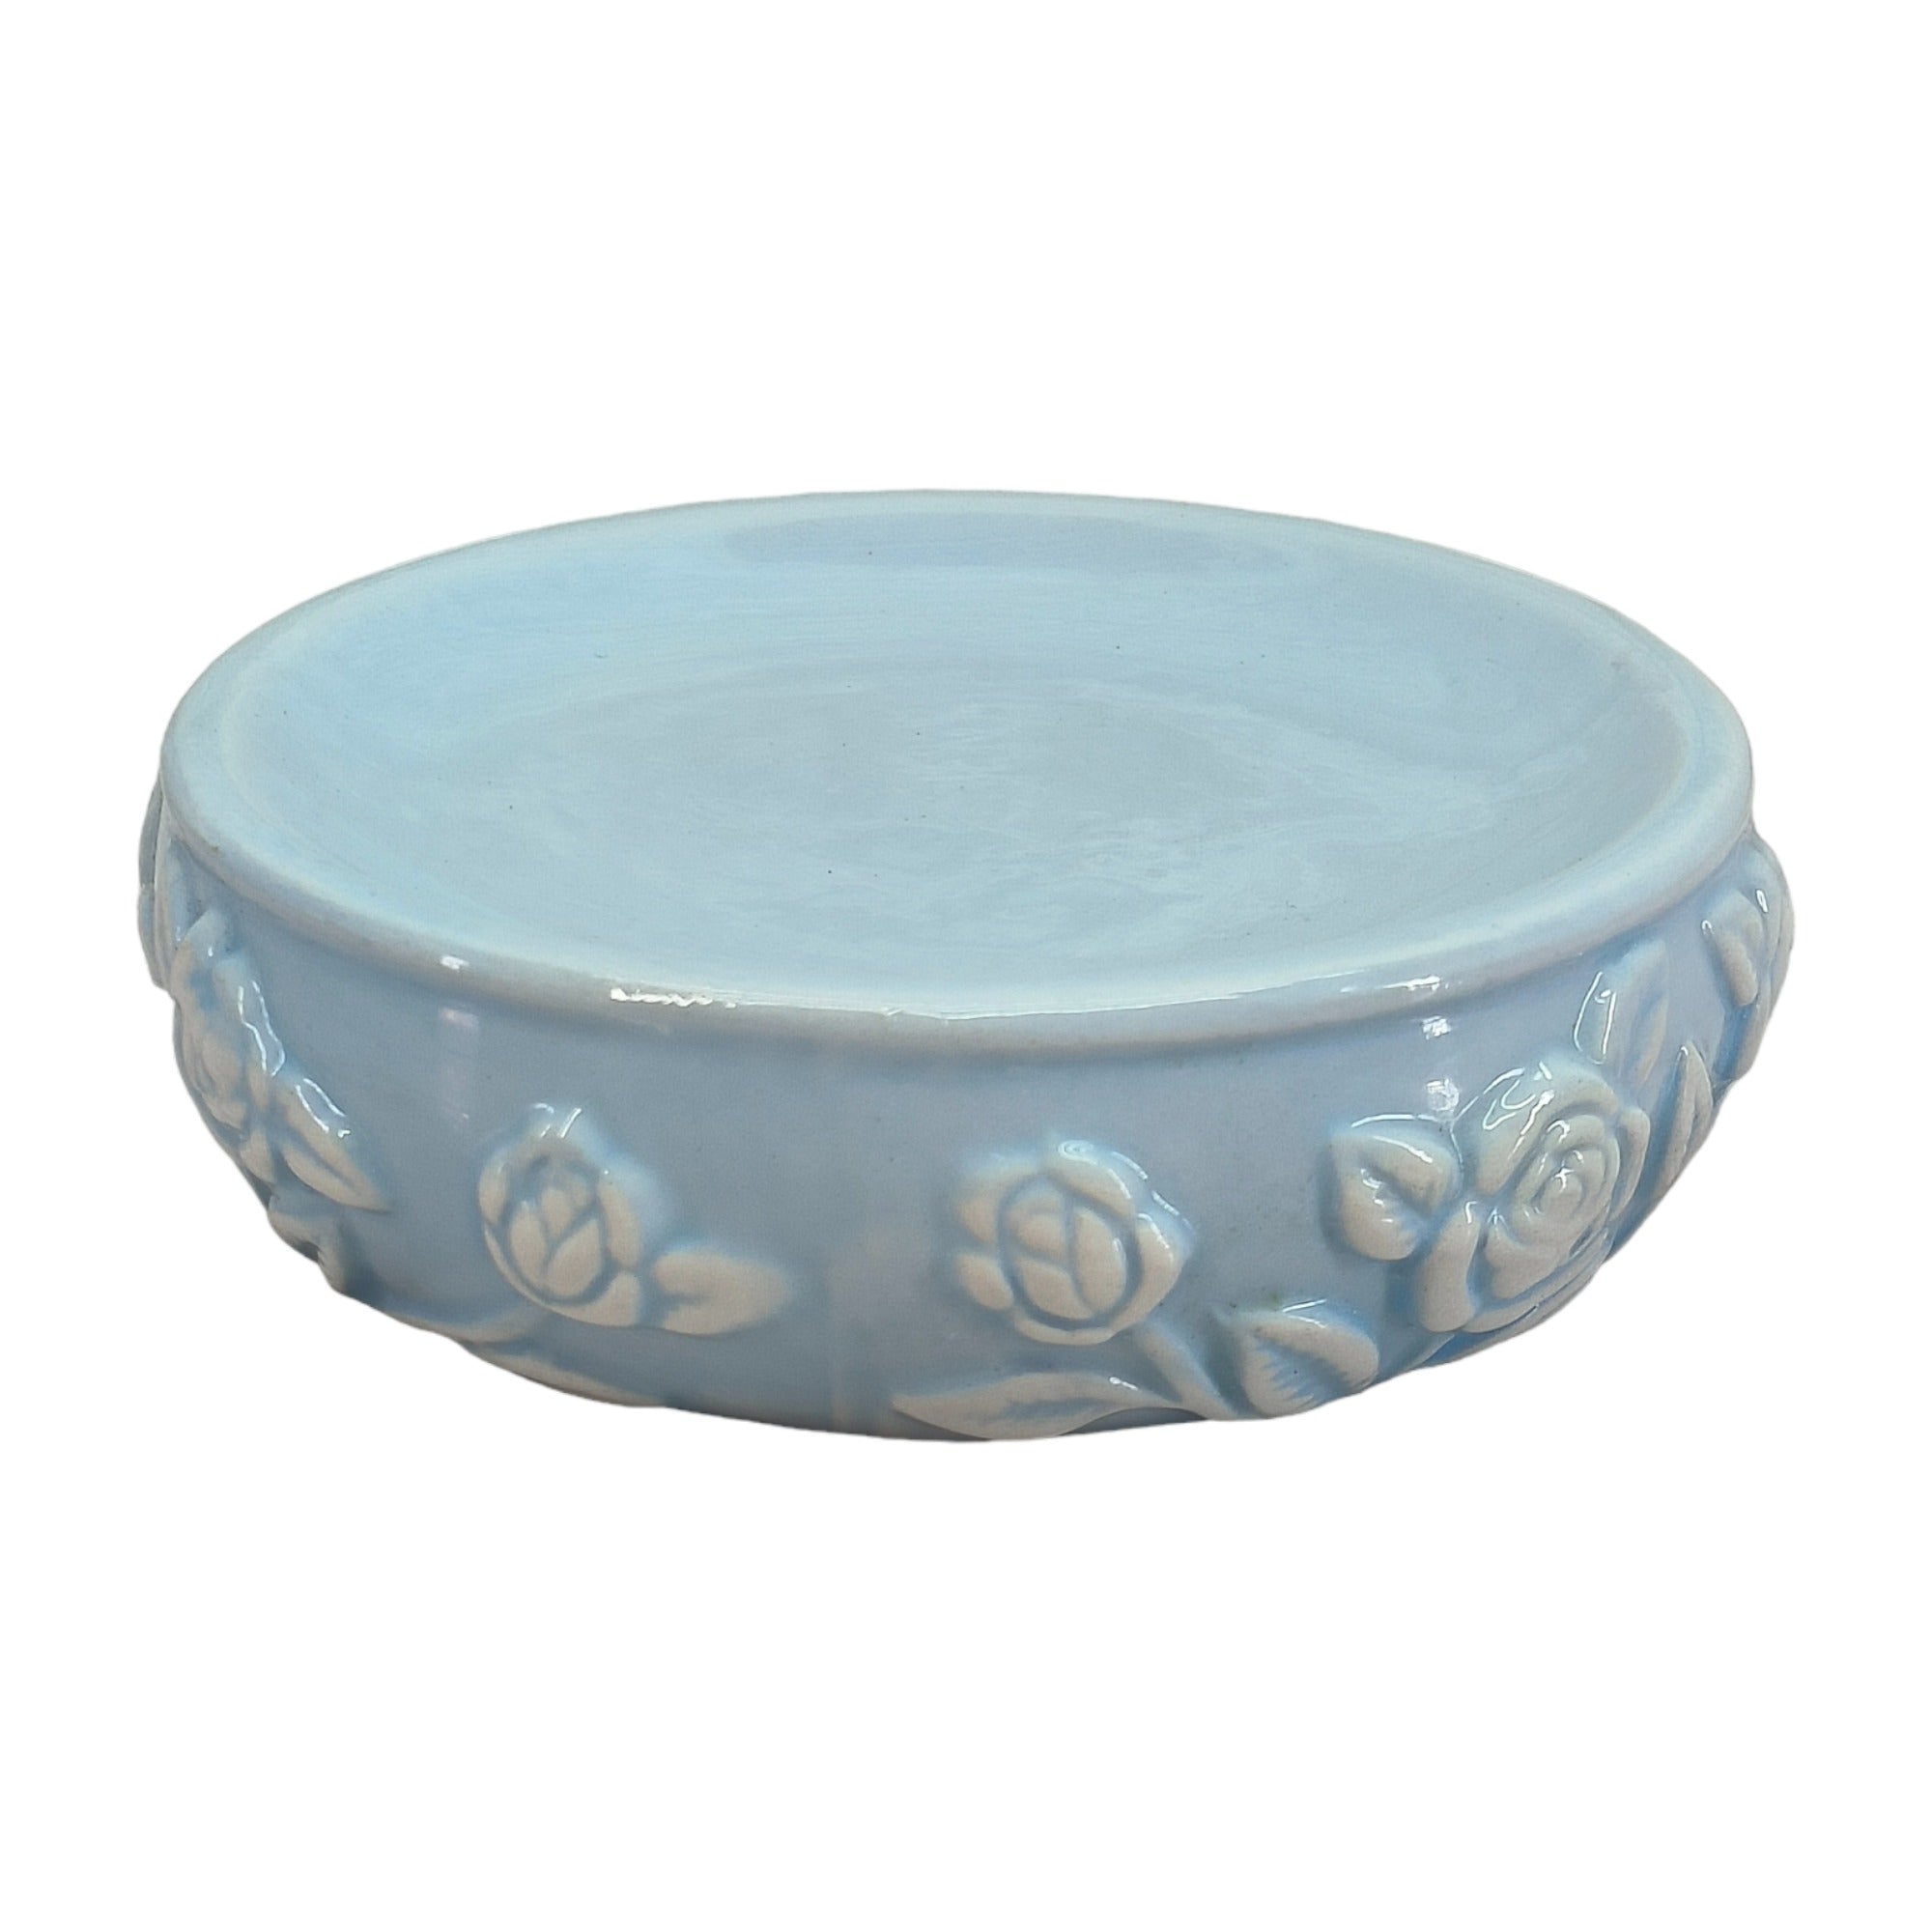 Ceramic Soap Dish Set of 1 Bathroom Accessories for Home (C1066)